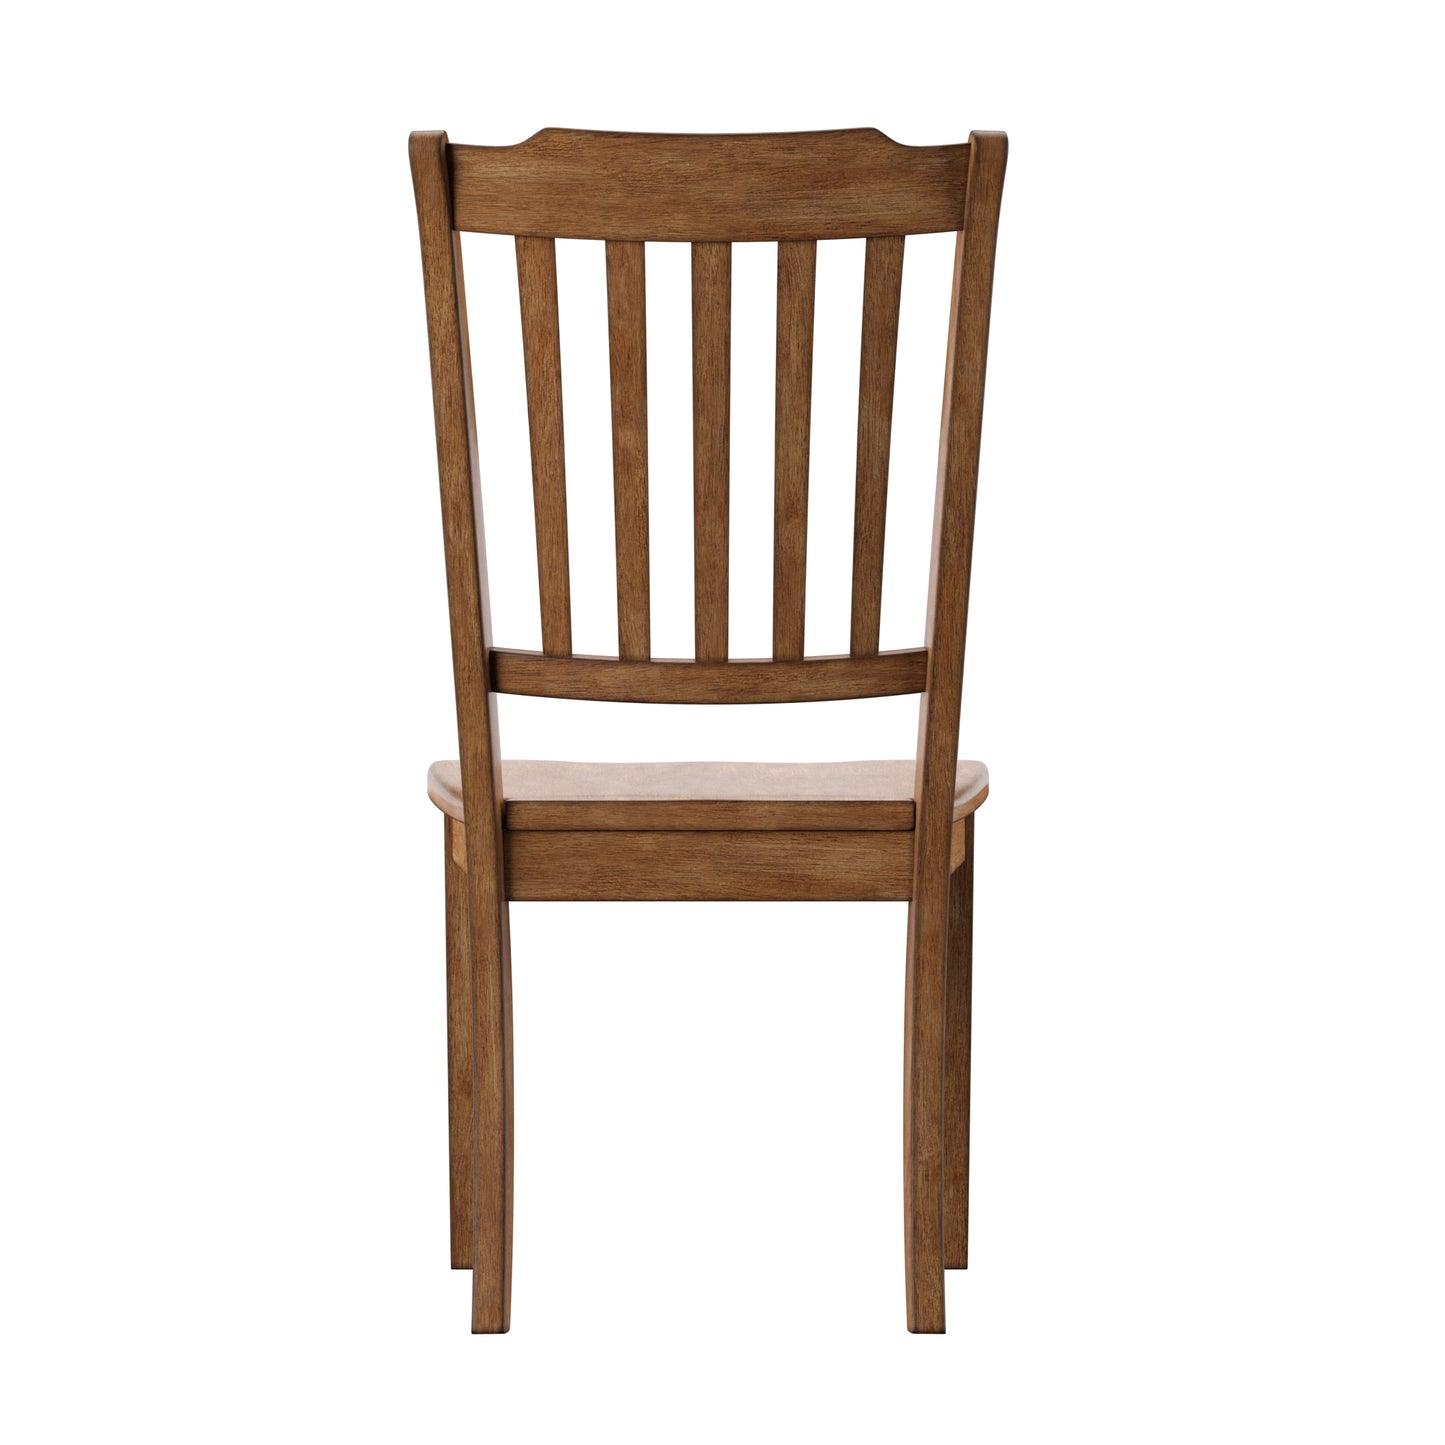 Slat Back Wood Dining Chairs (Set of 2) - Oak Finish